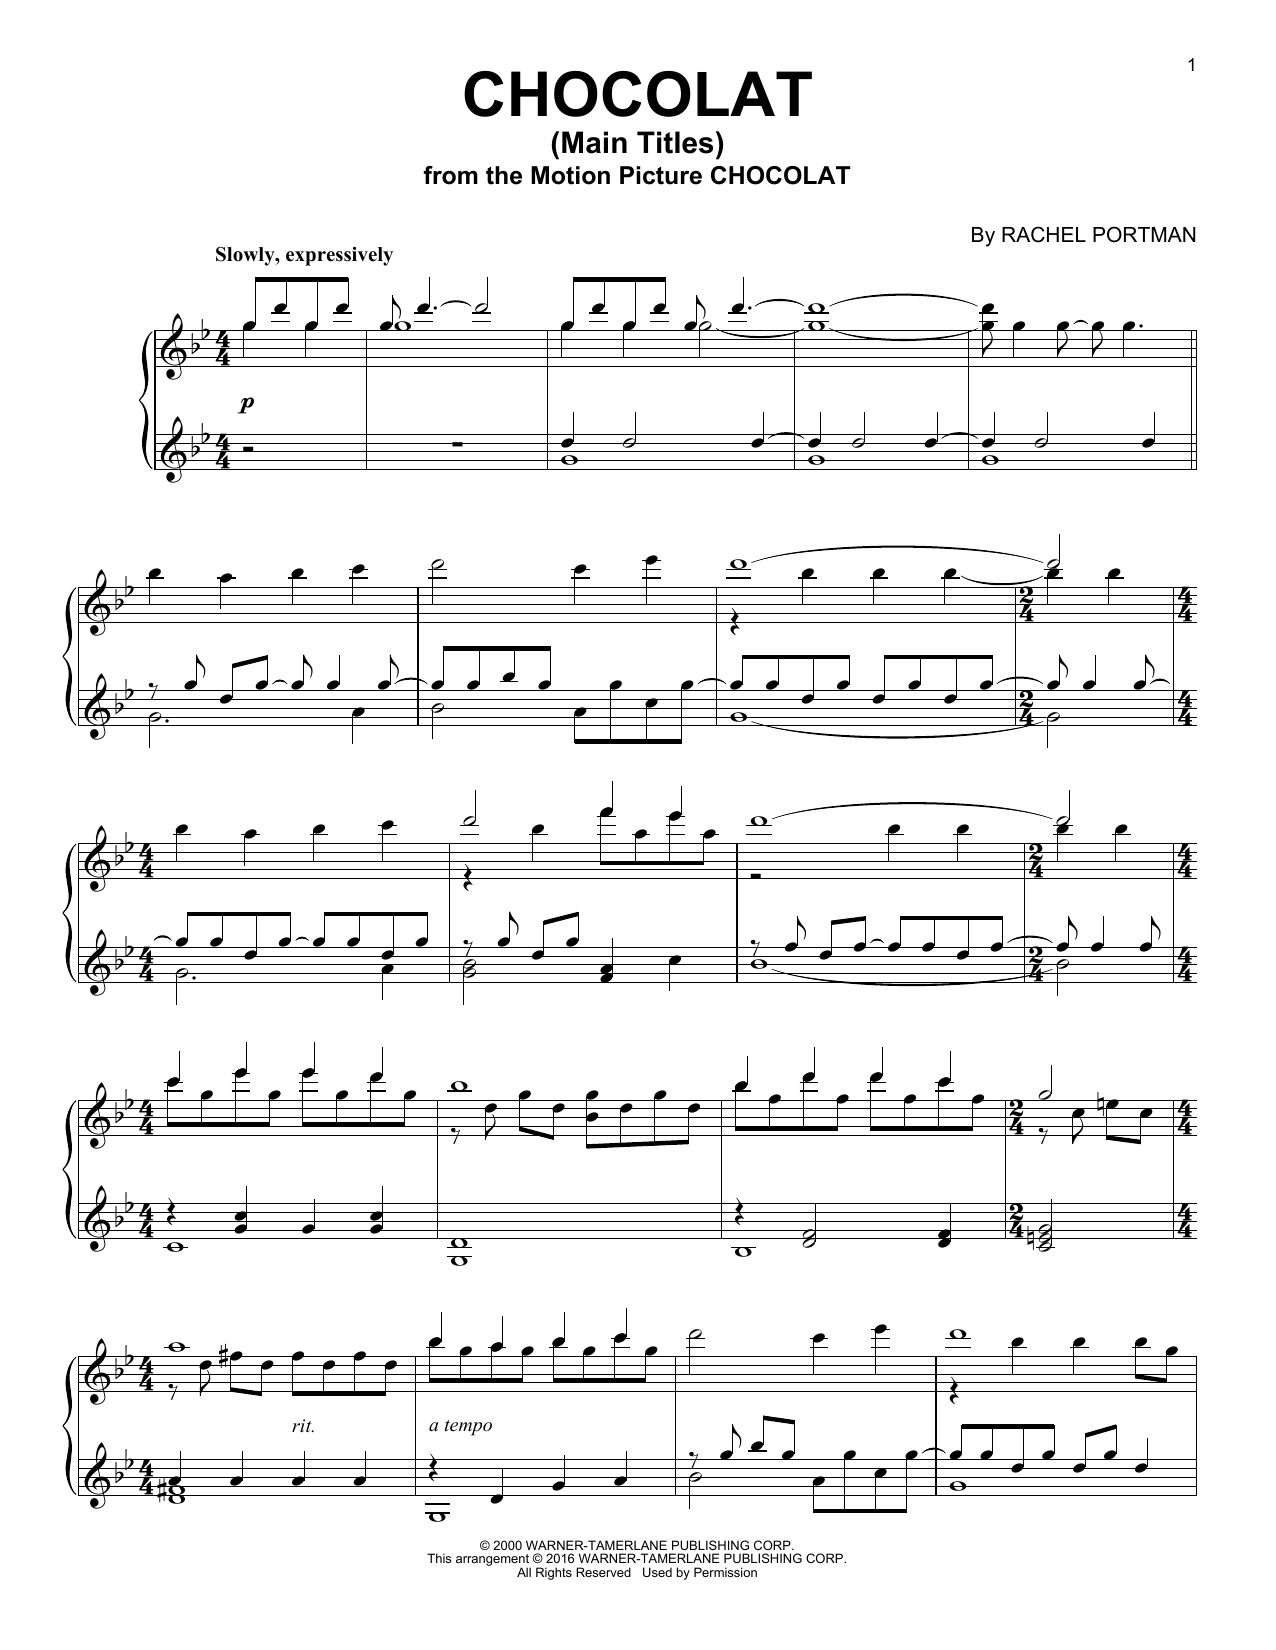 Rachel Portman Chocolat (Main Titles) Sheet Music Notes & Chords for Piano - Download or Print PDF